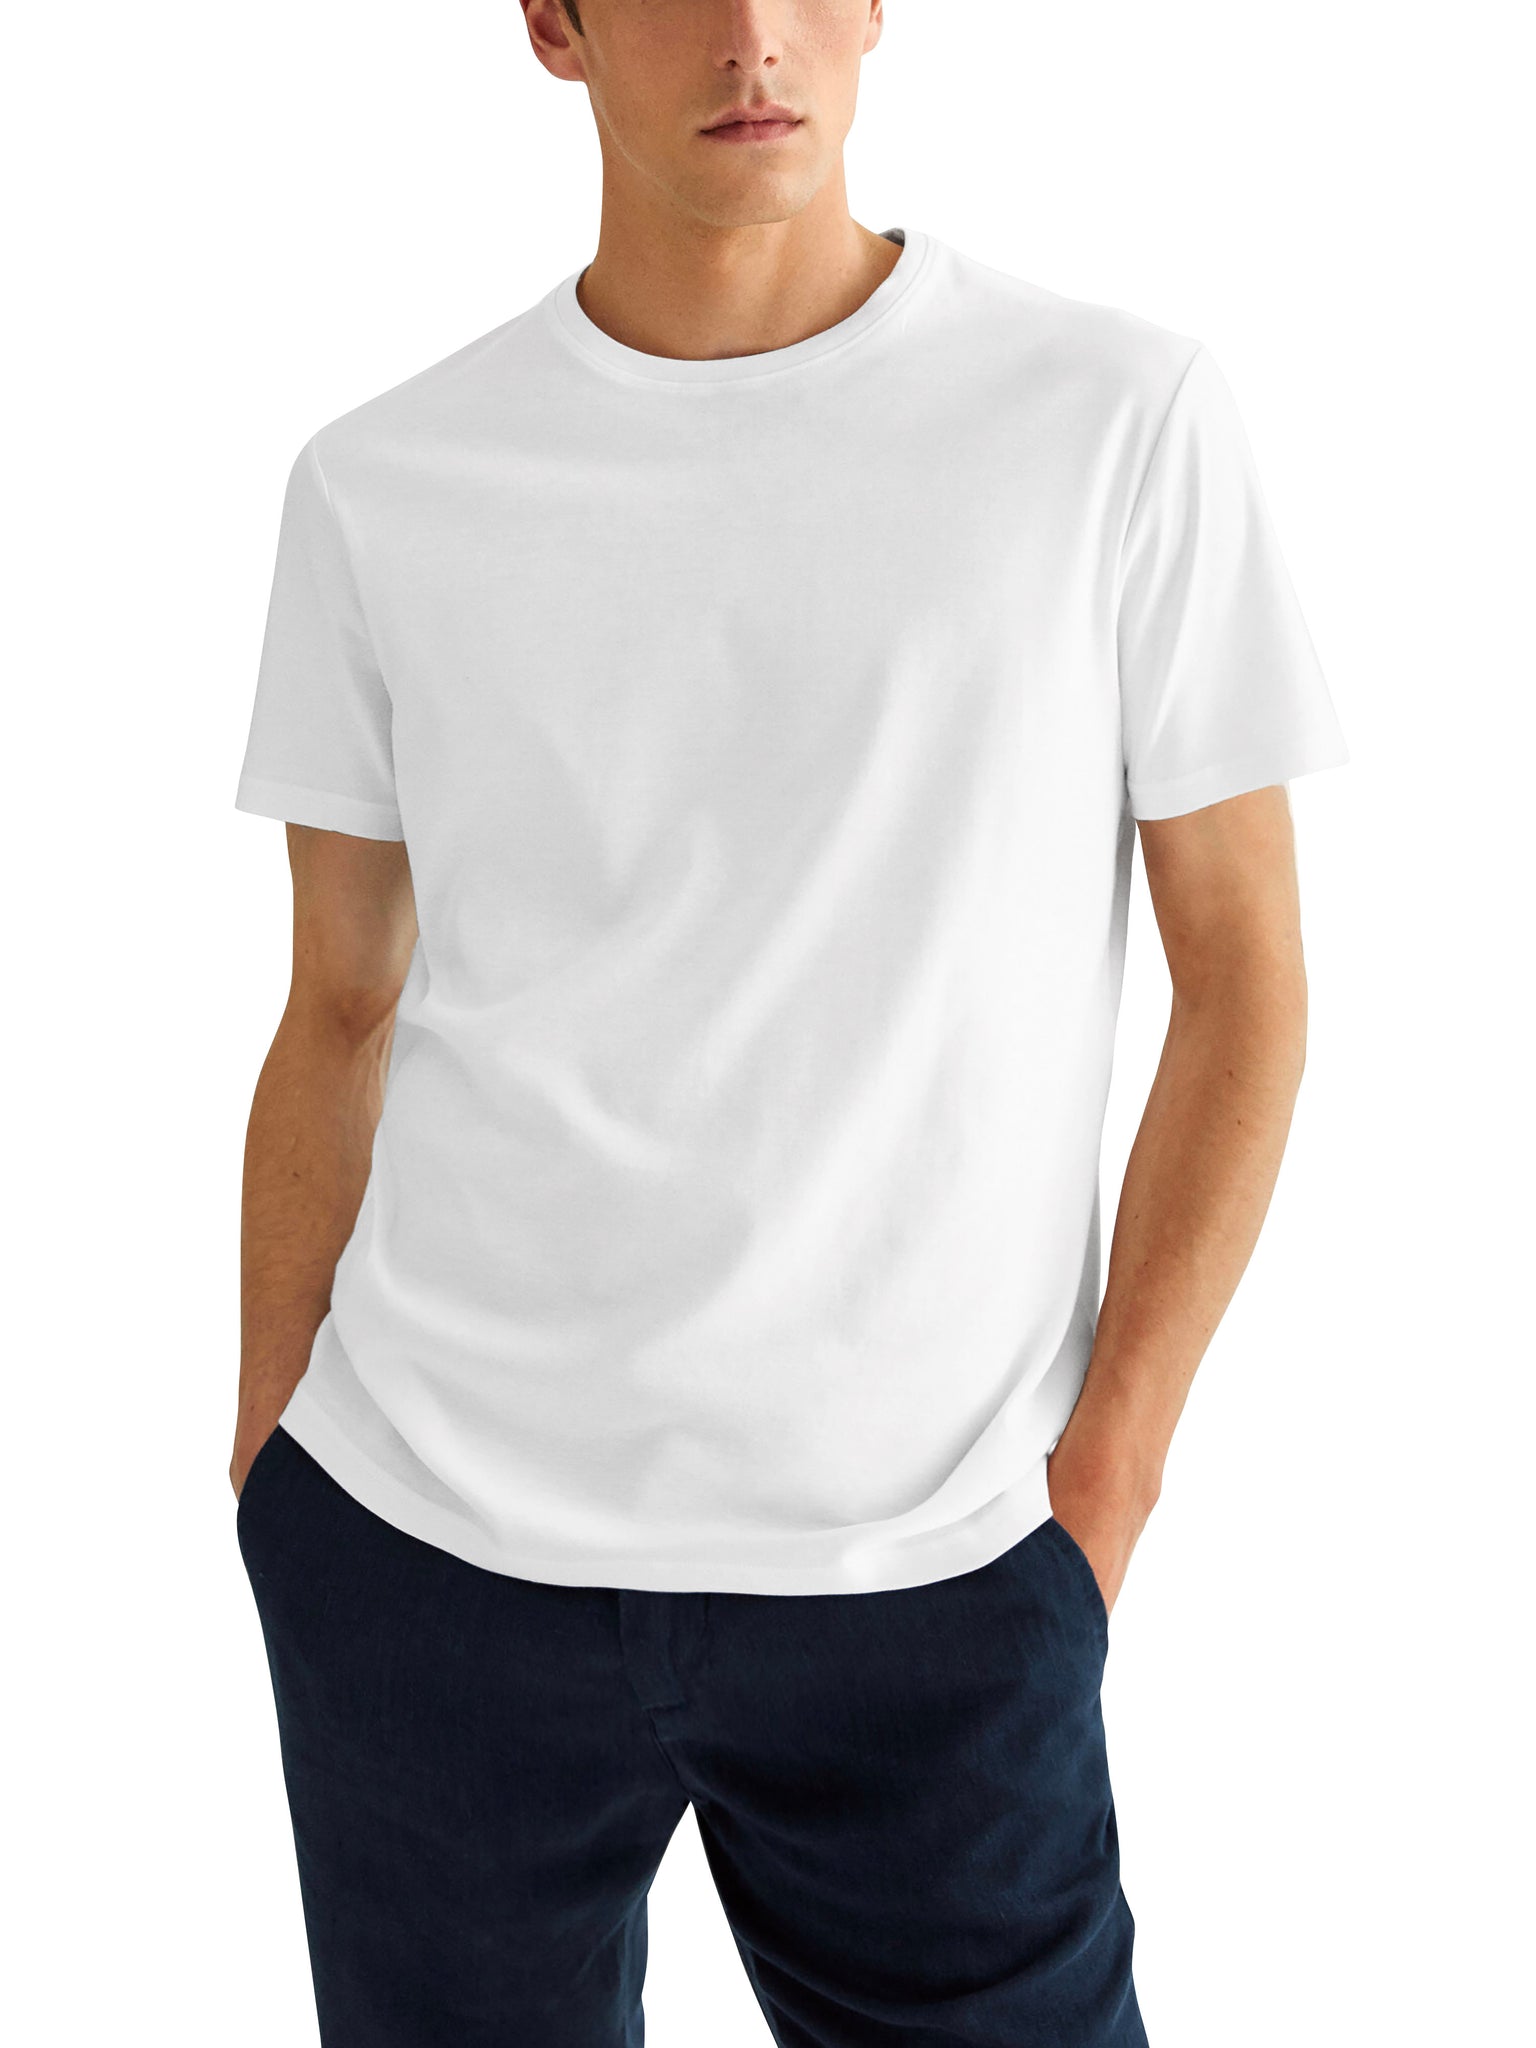 Men's Breathable Cooling Cotton White Crew Neck T-Shirts